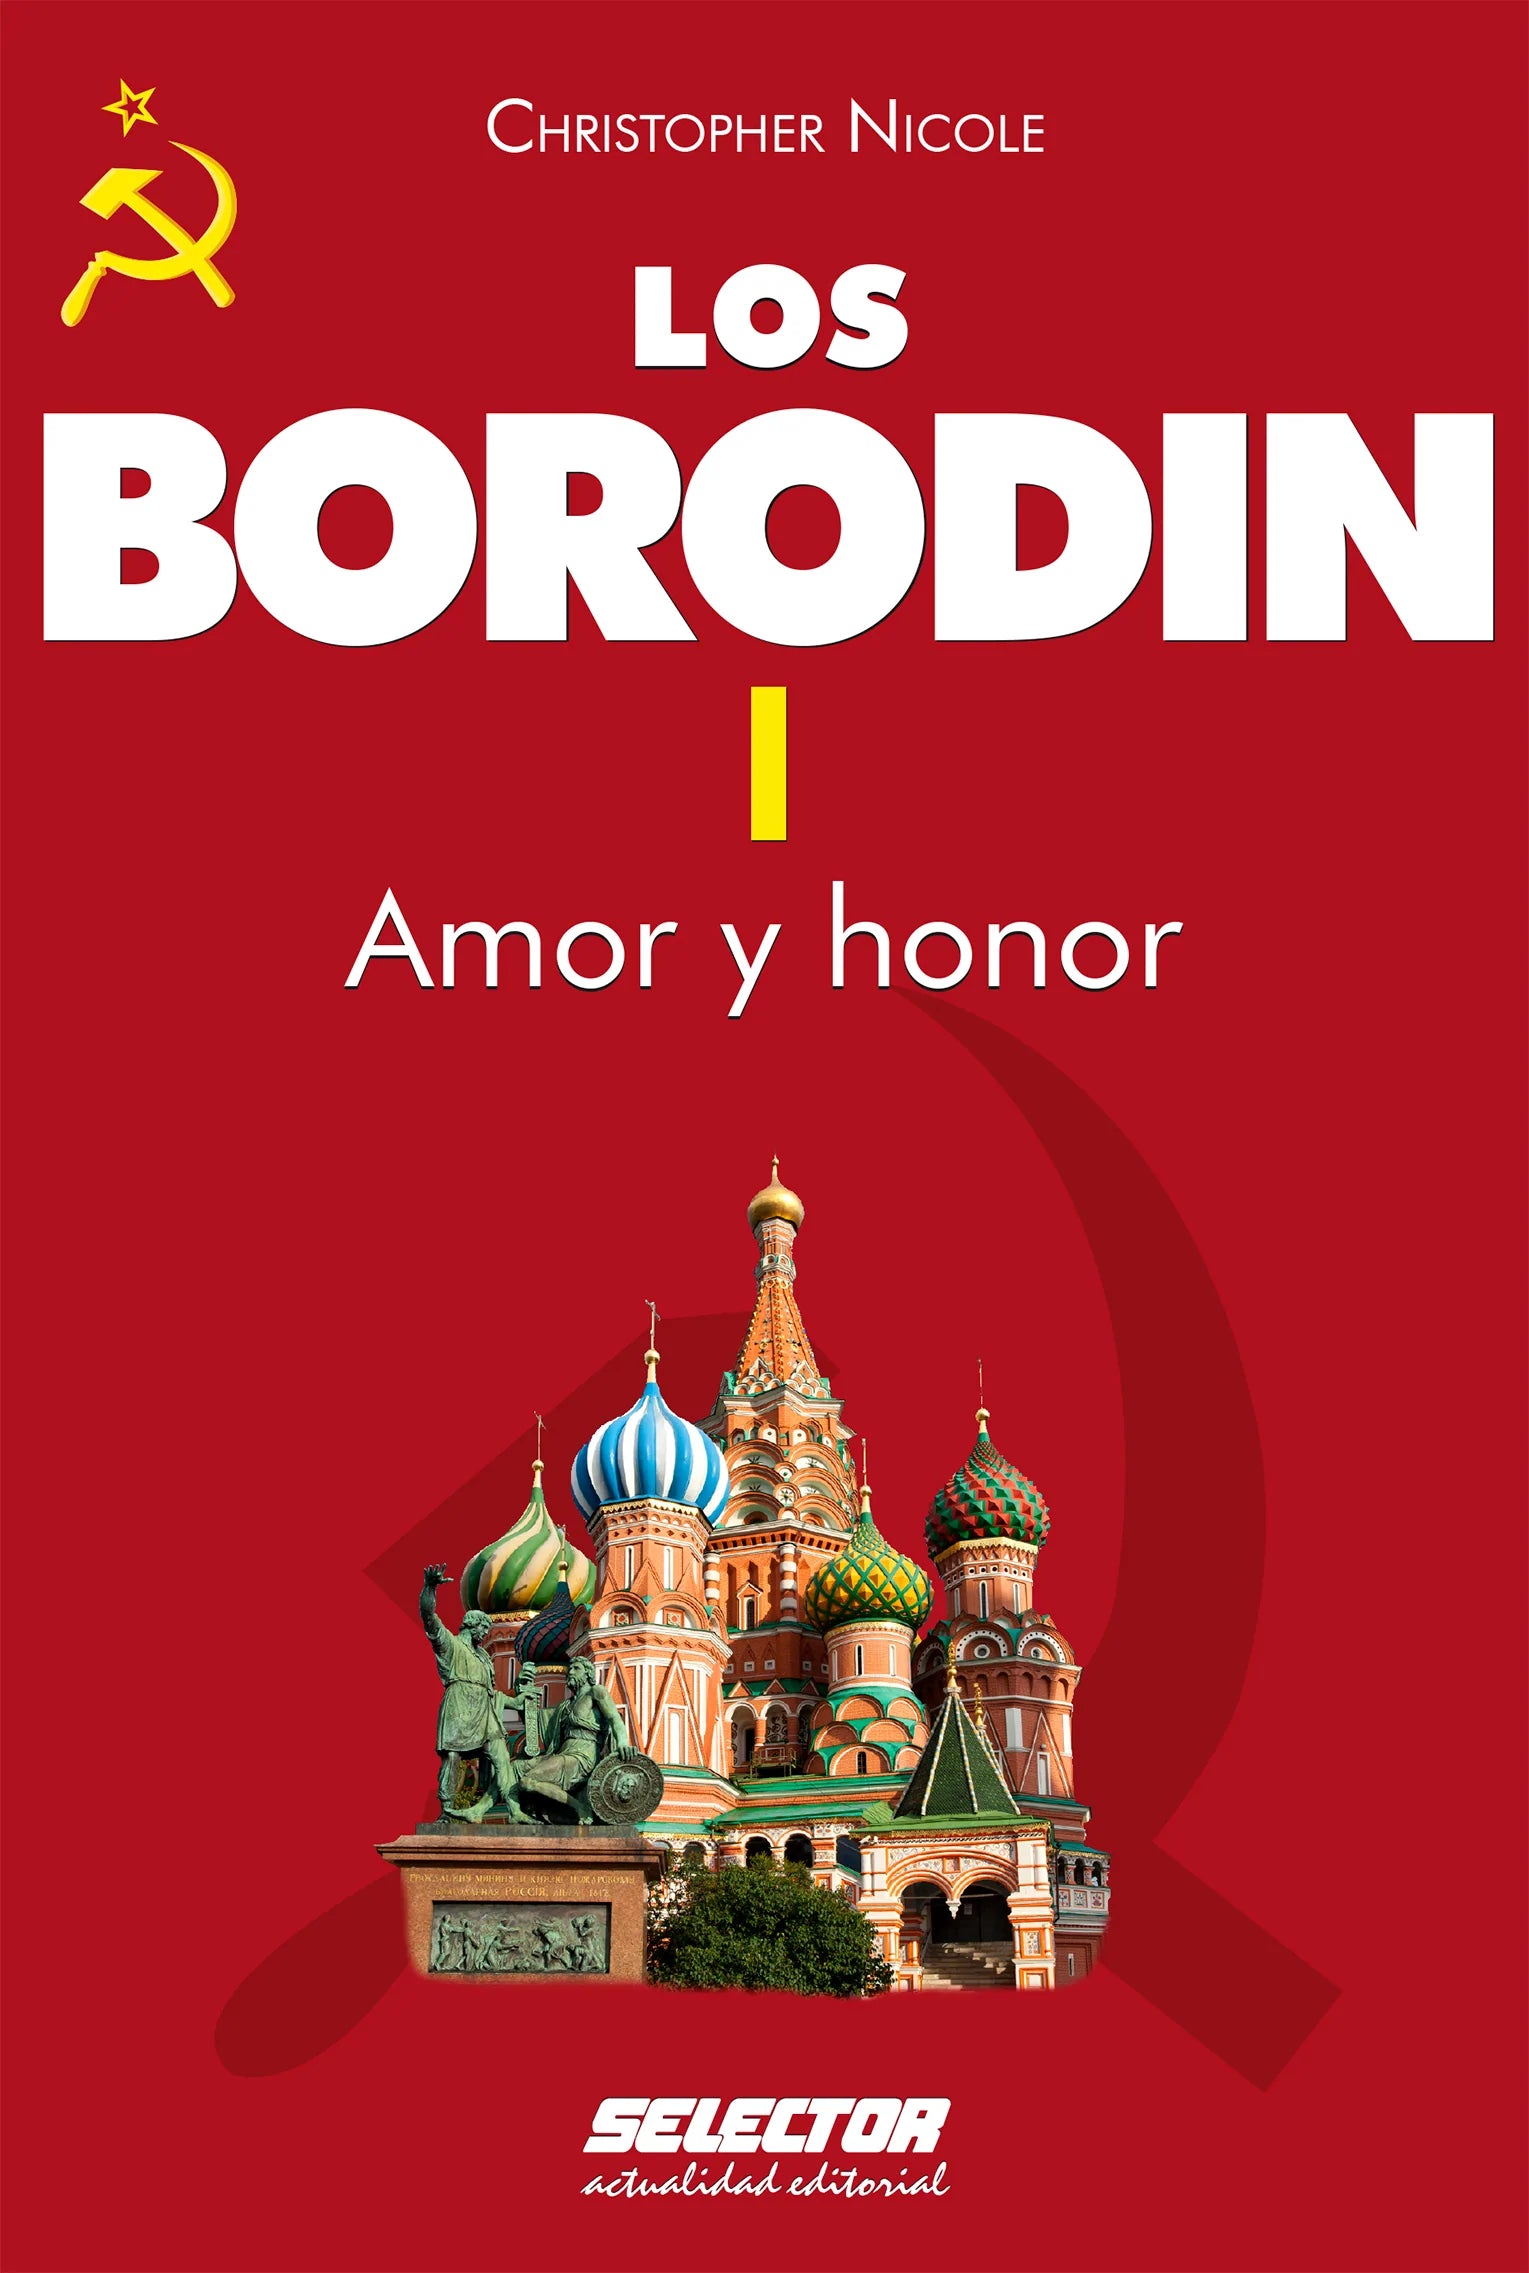 Borodin I. Amor y honor - Editorial Selector